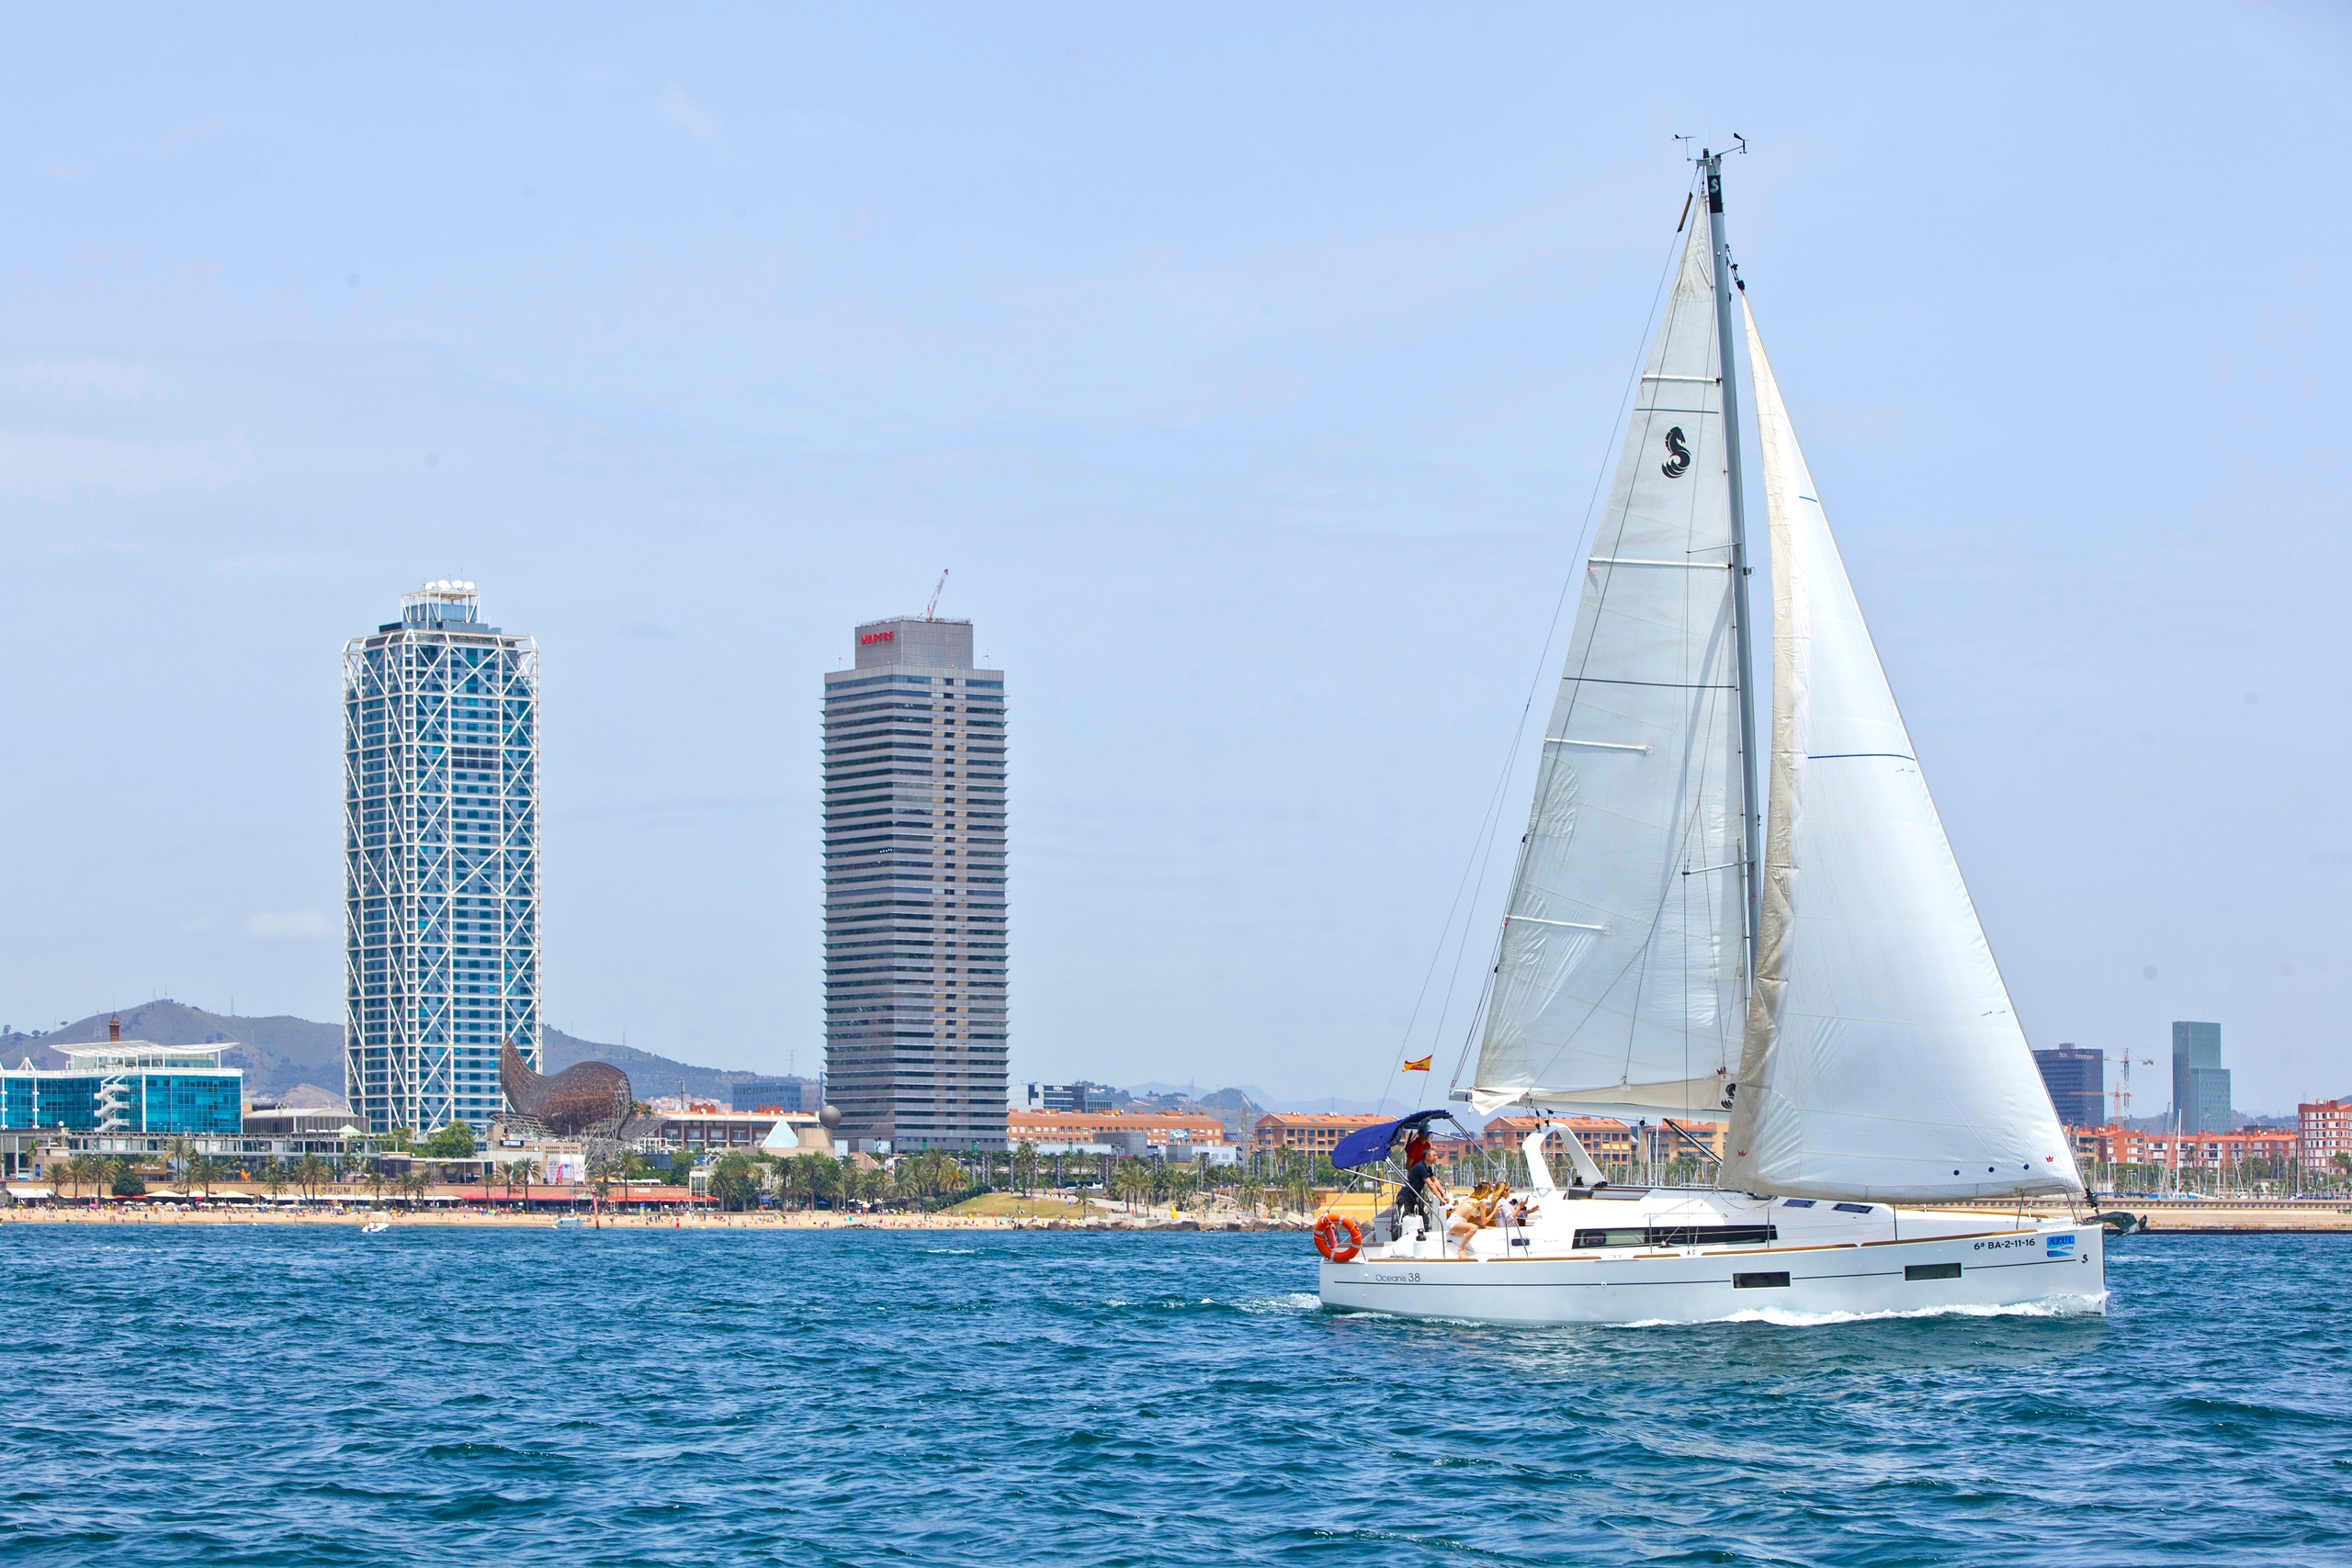 Private Sailing Tour around Barcelona